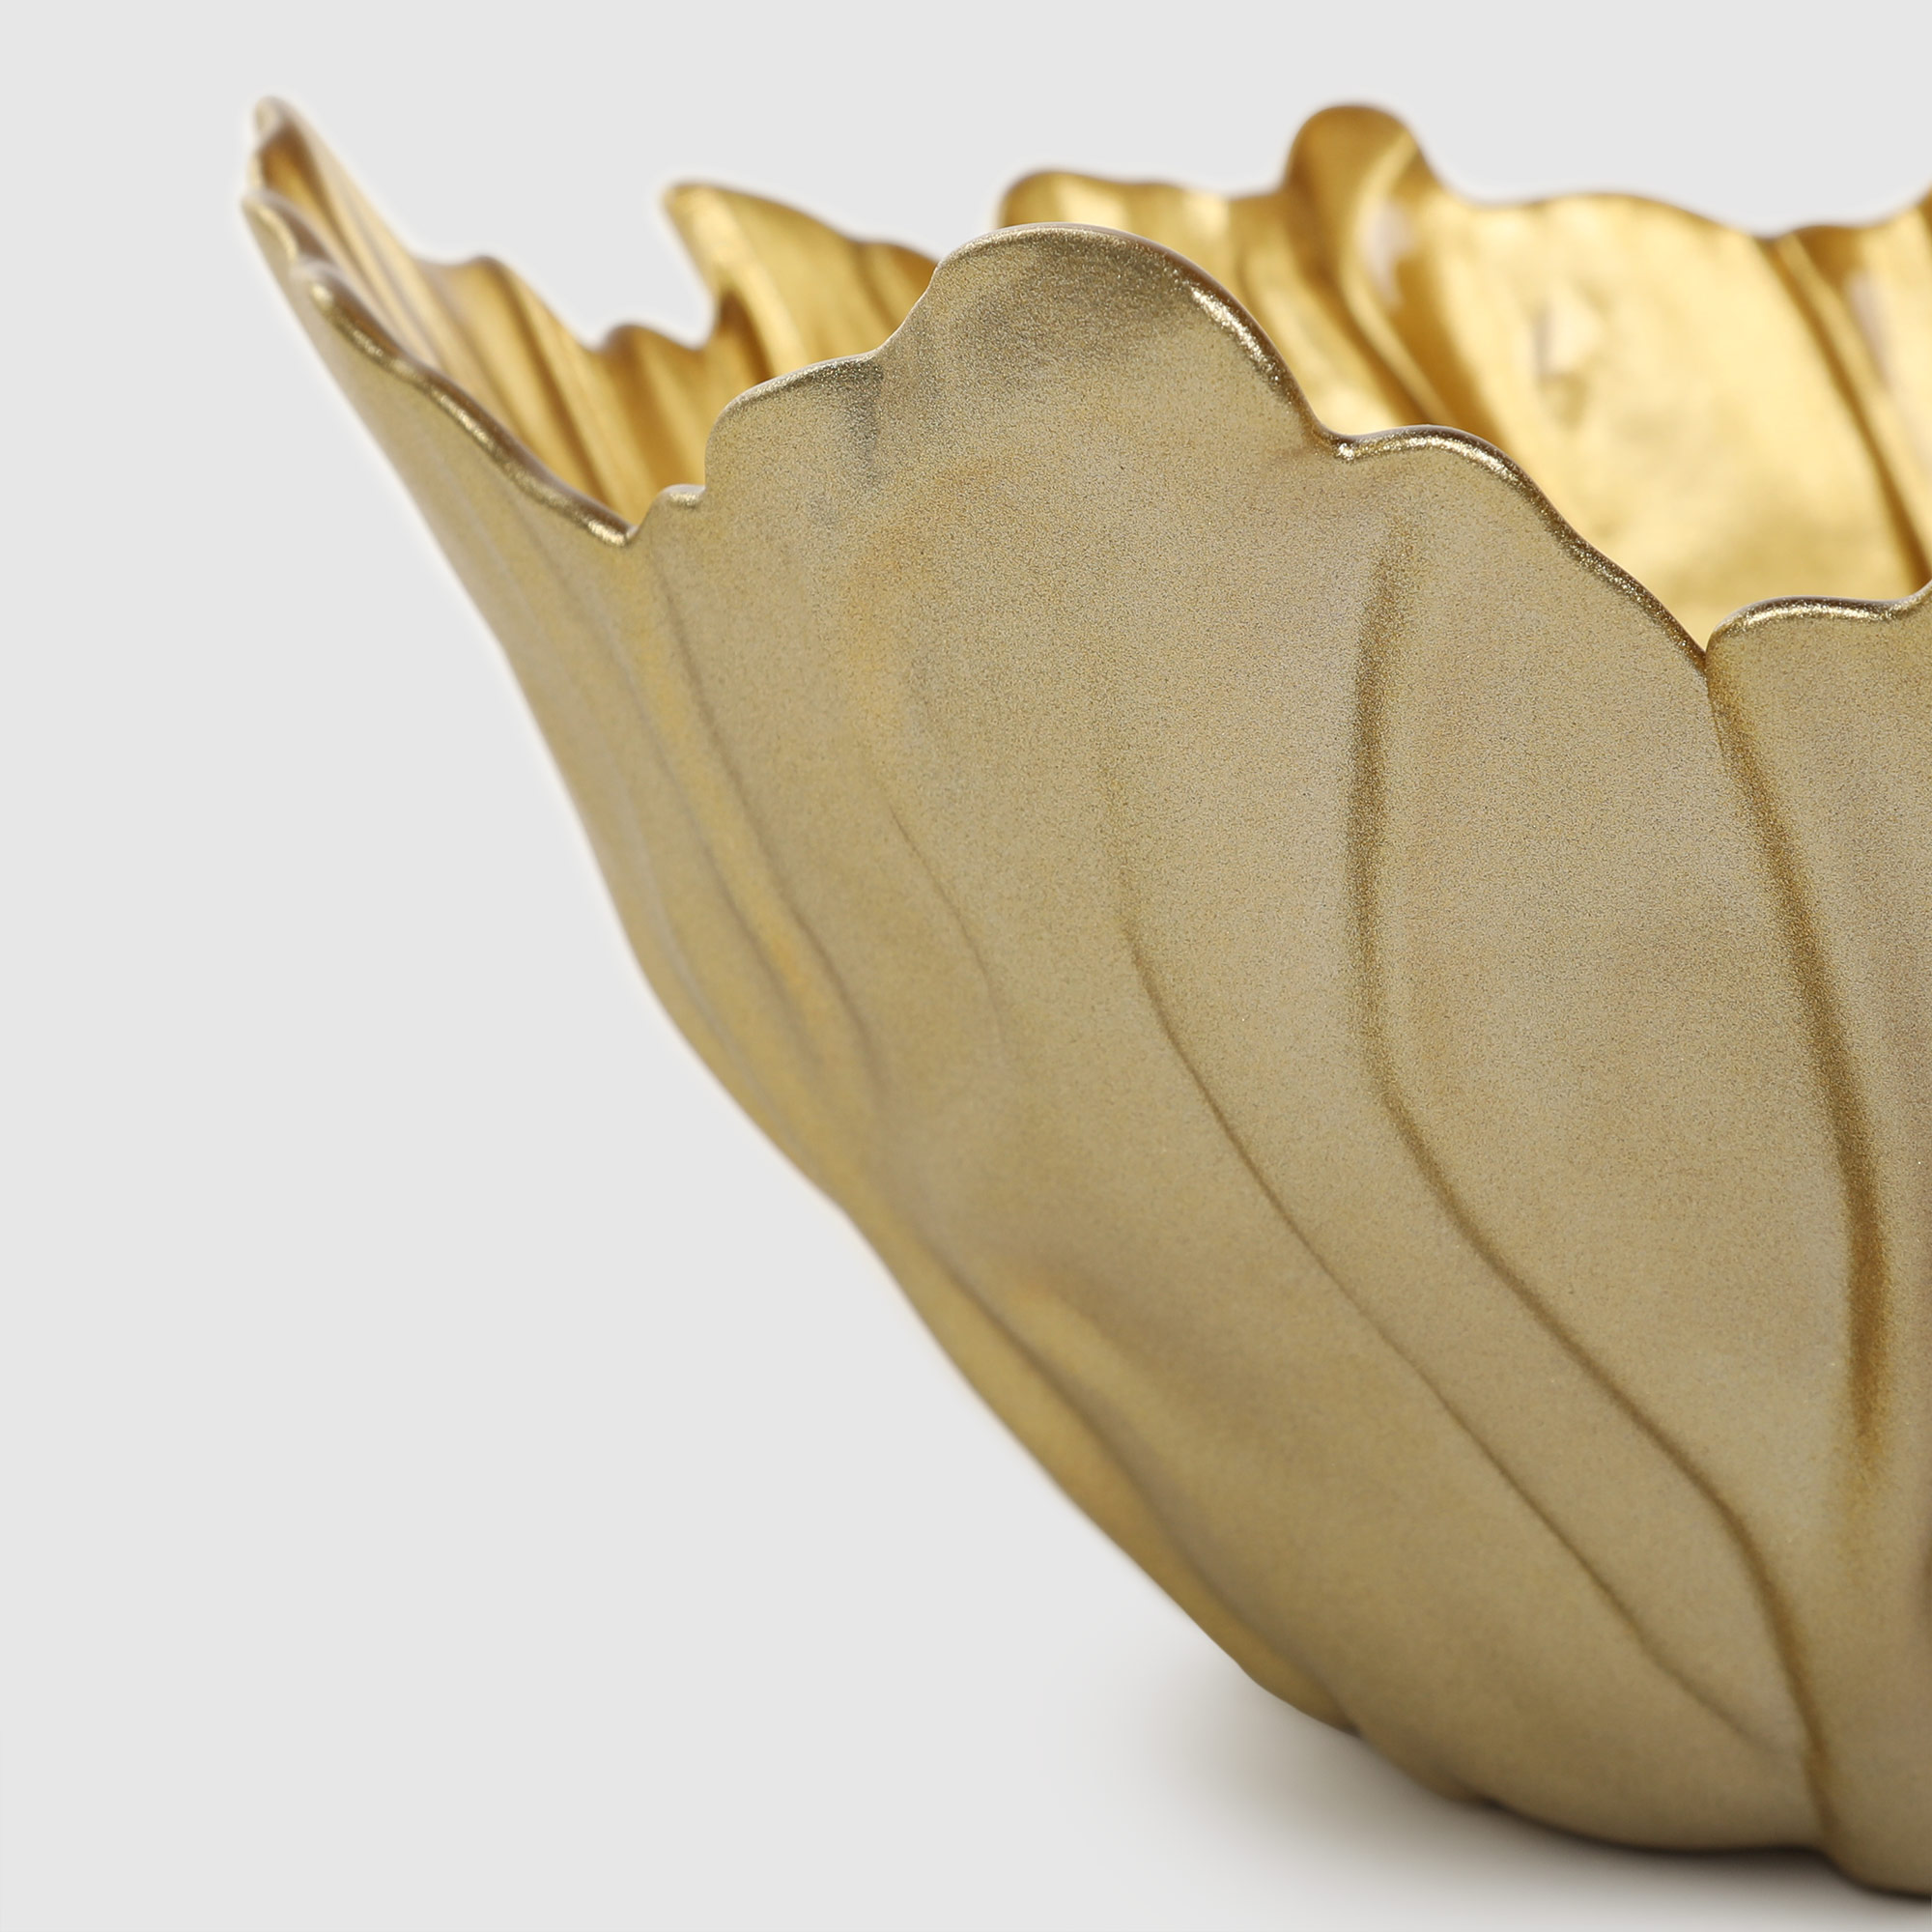 Блюдо Mercury Tableware Karina золото 29,5 см, цвет золотистый - фото 3